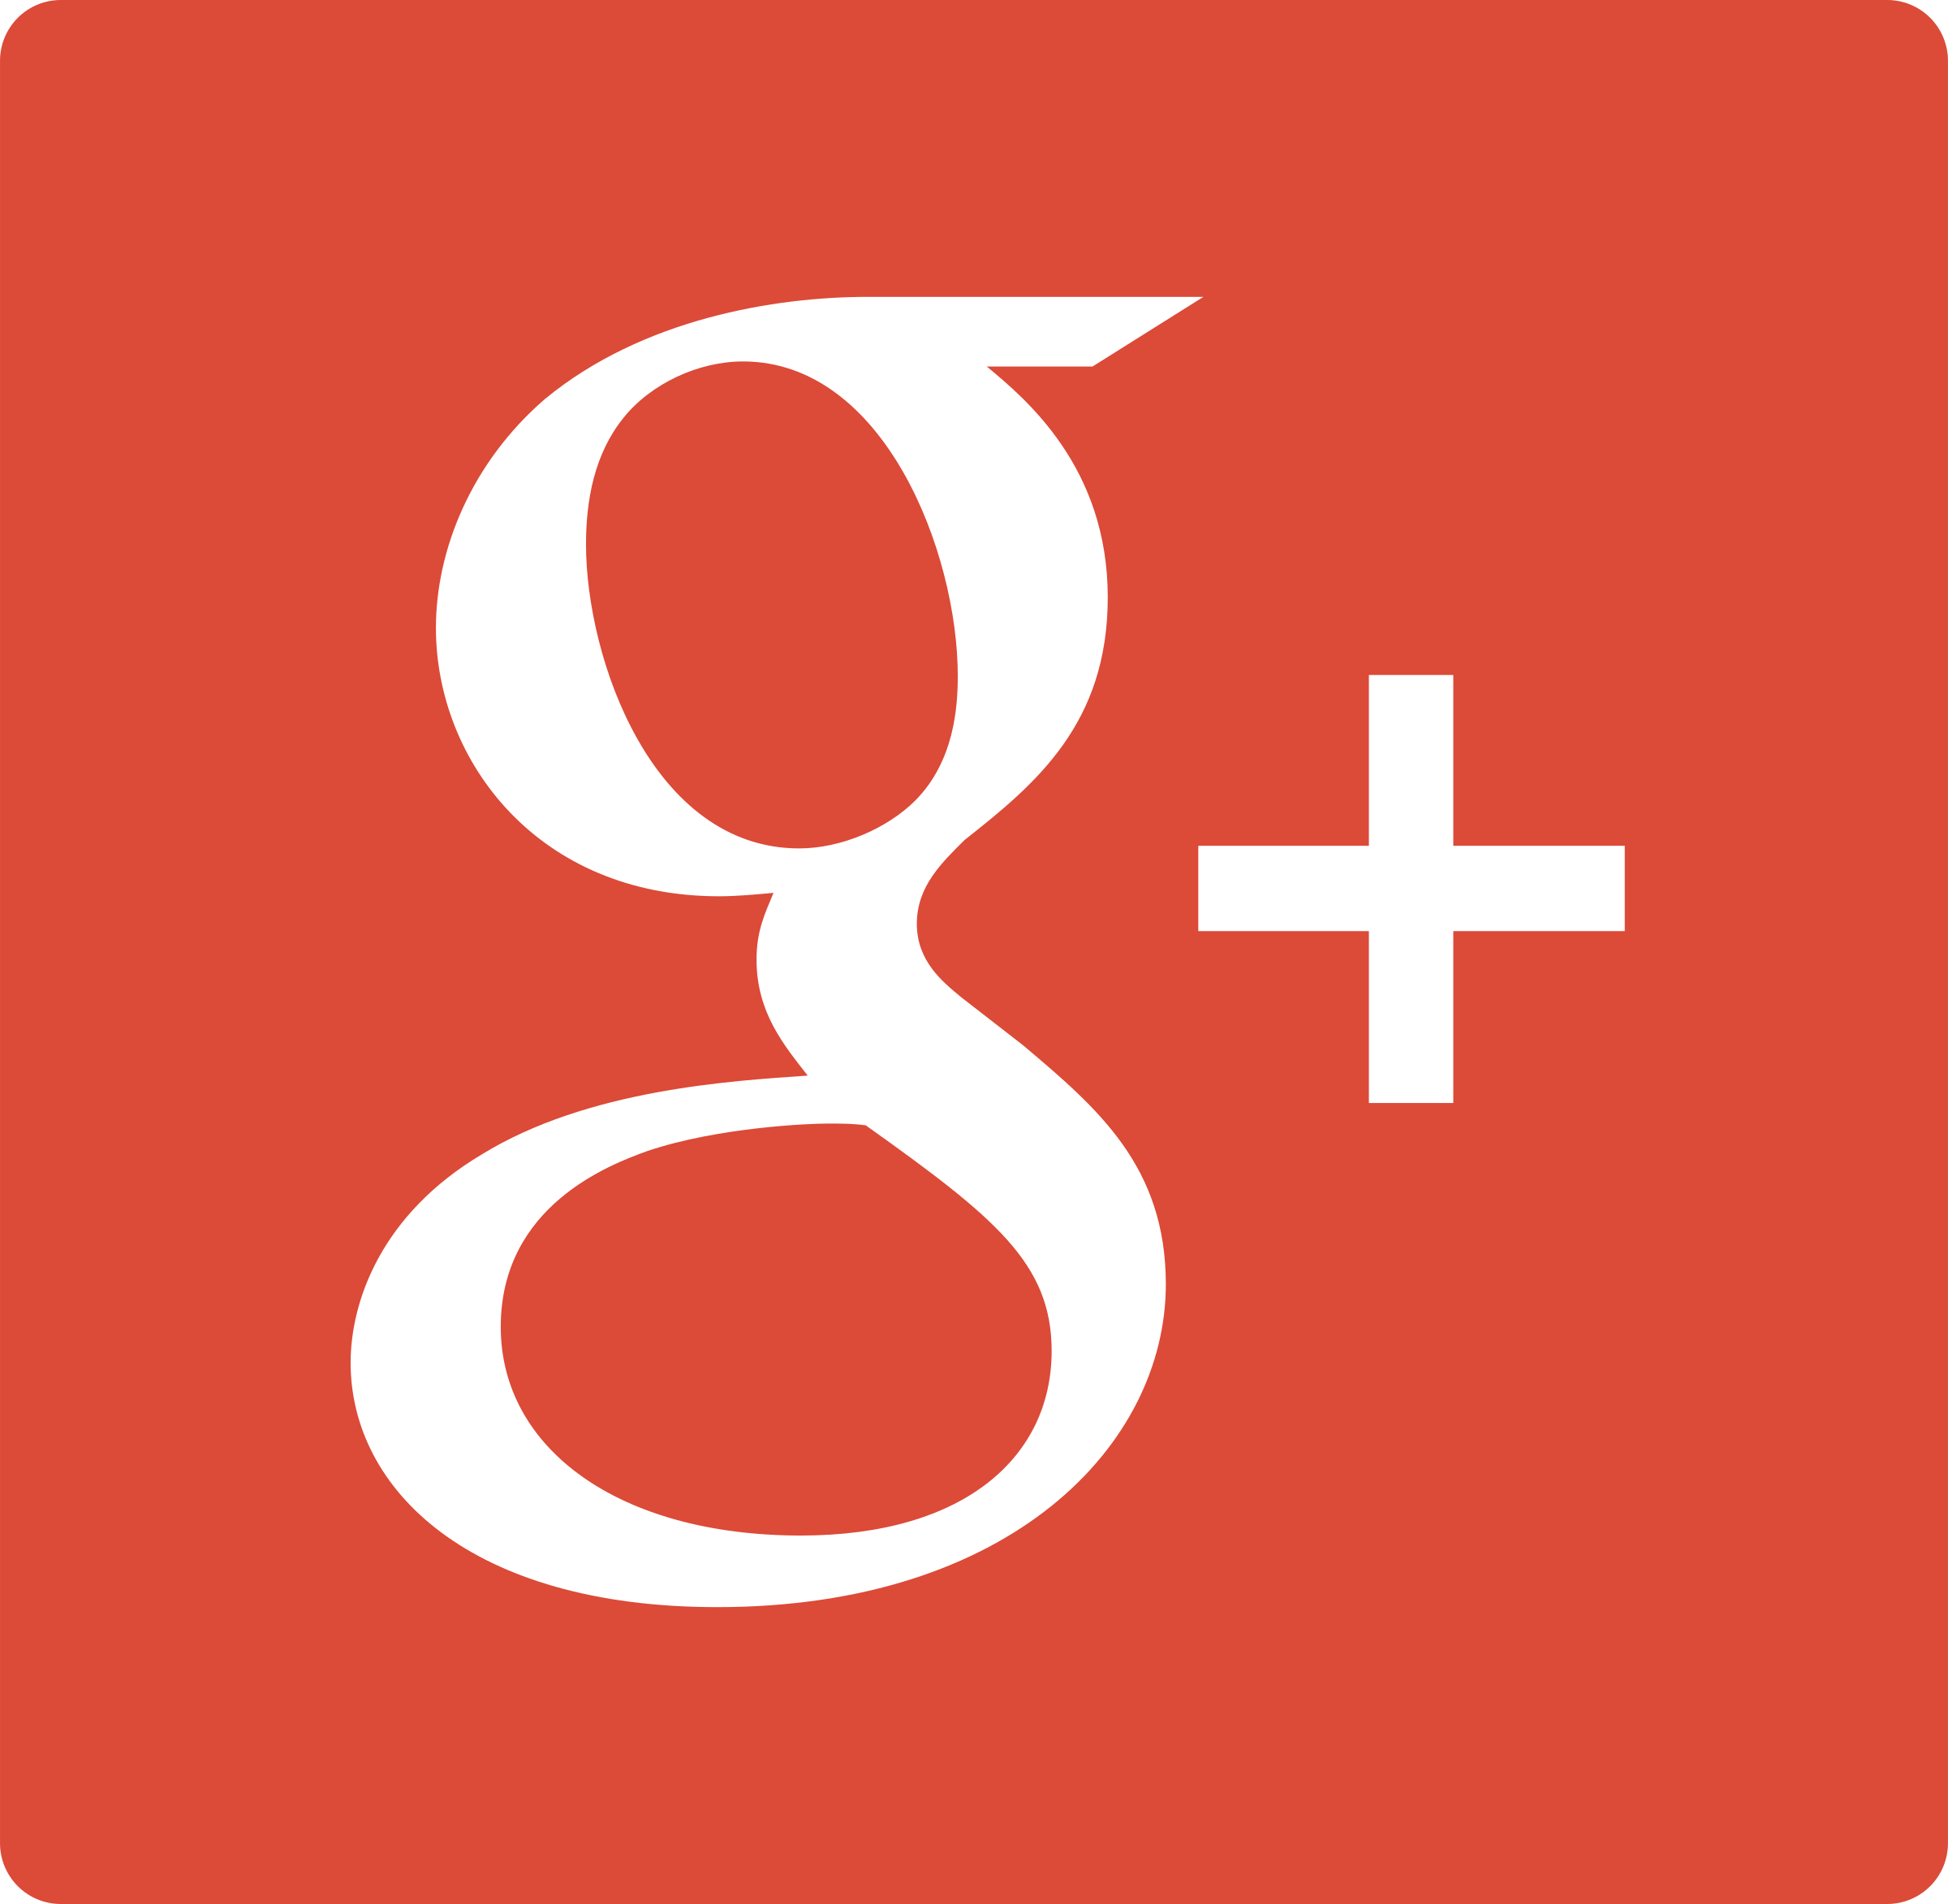 Find Us Google Plus Logo - Google plus Logo PNG Transparent & SVG Vector - Freebie Supply